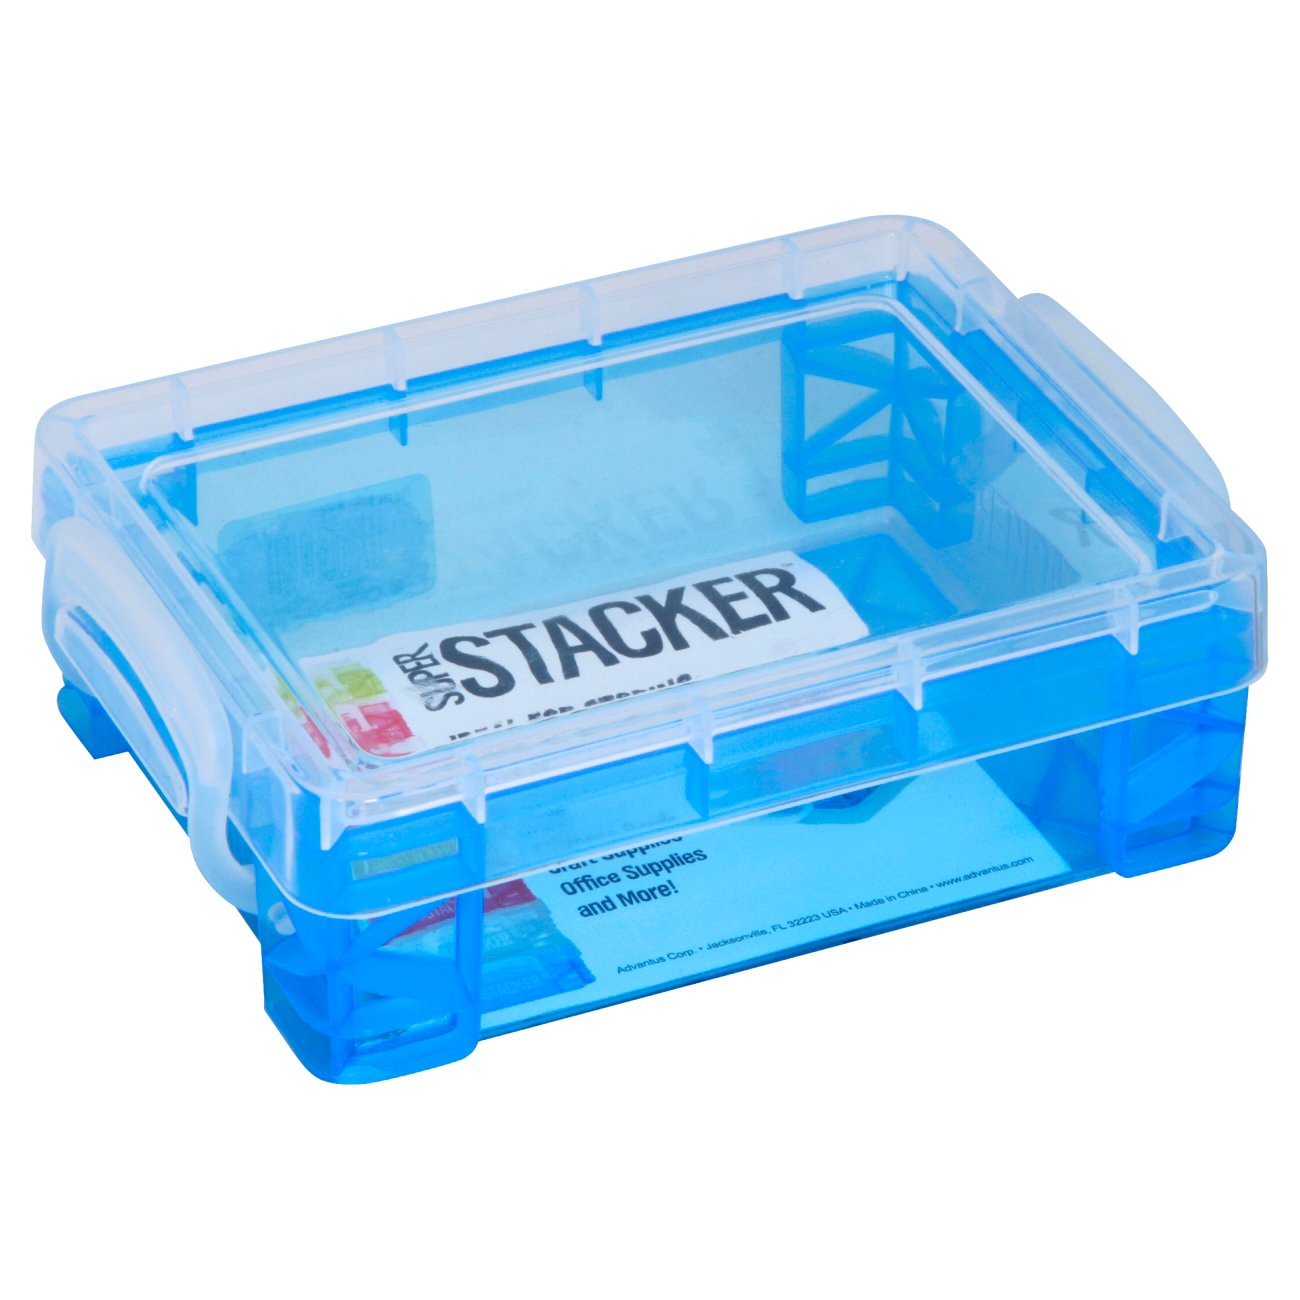 Super Stackers Crayon Box, Assorted Colors - Shop Pencil Cases at